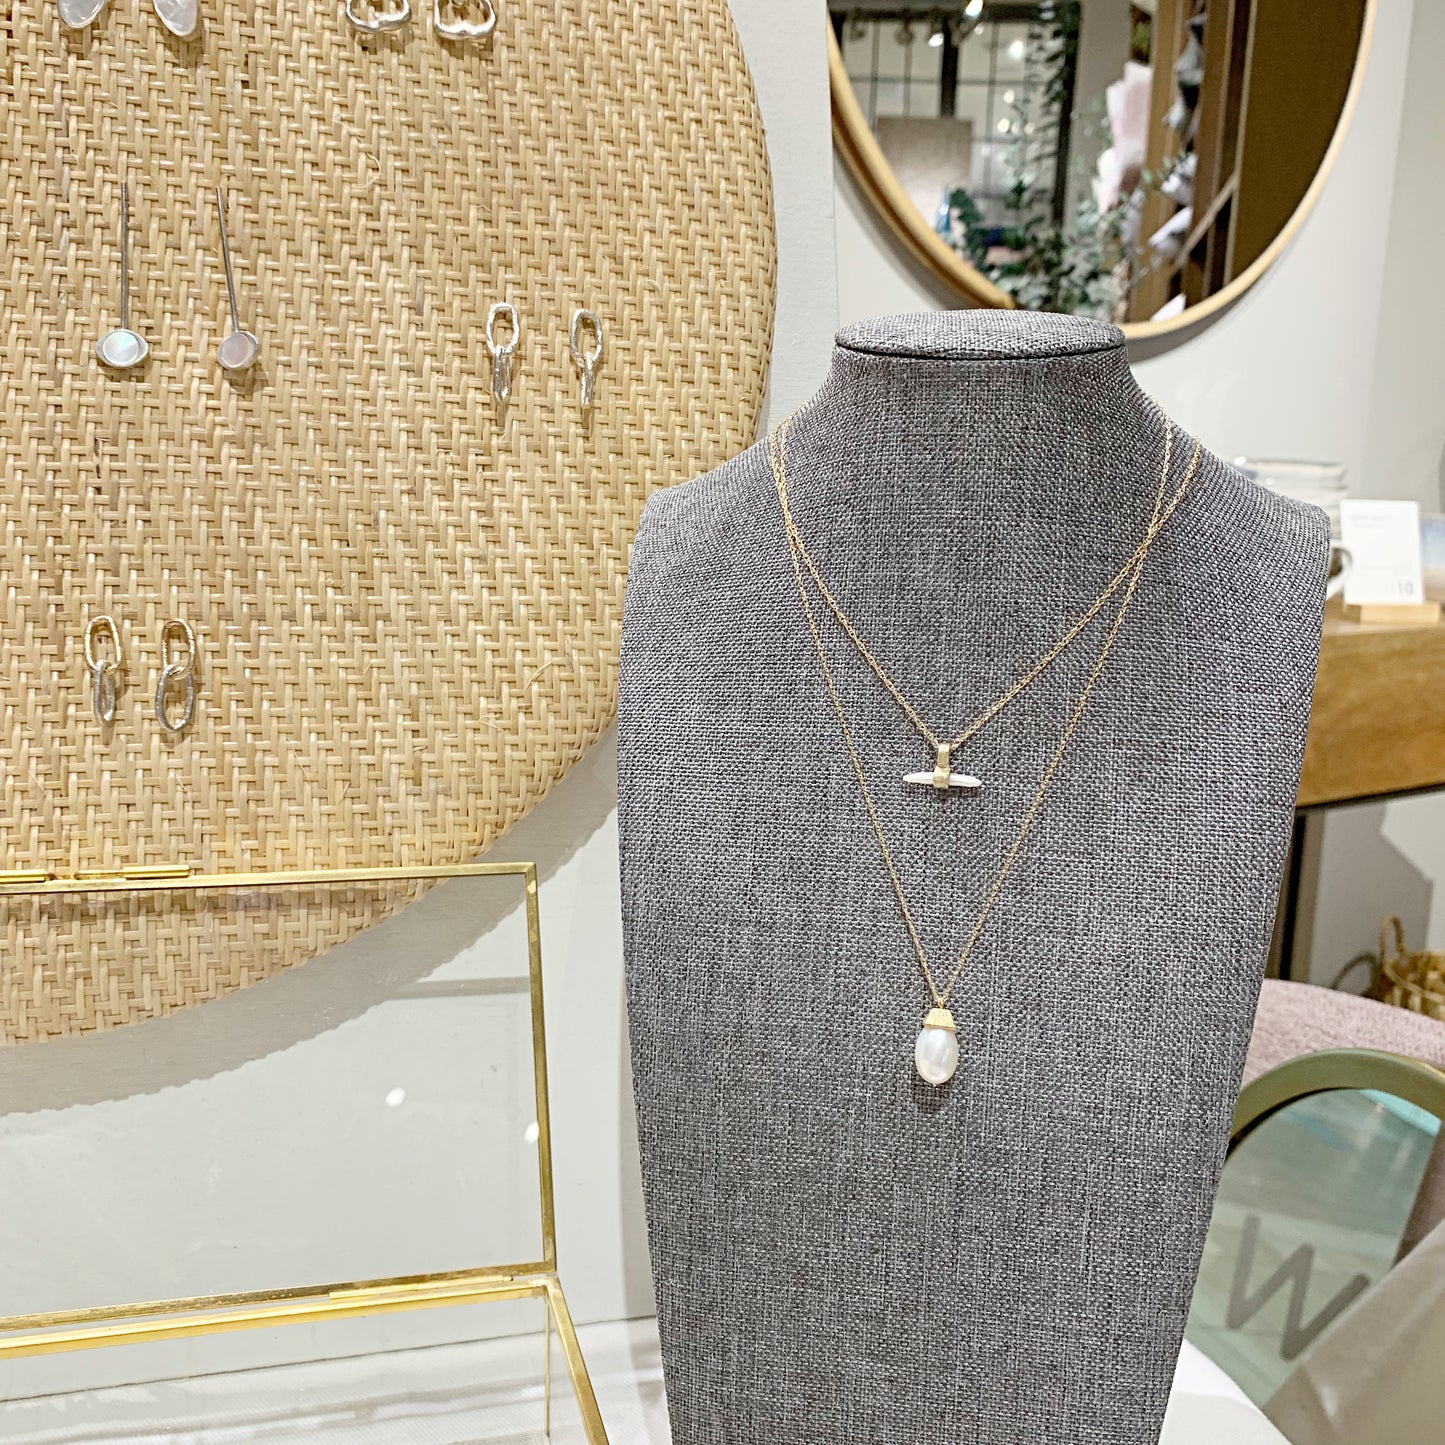 Keshi pearl pendant necklace